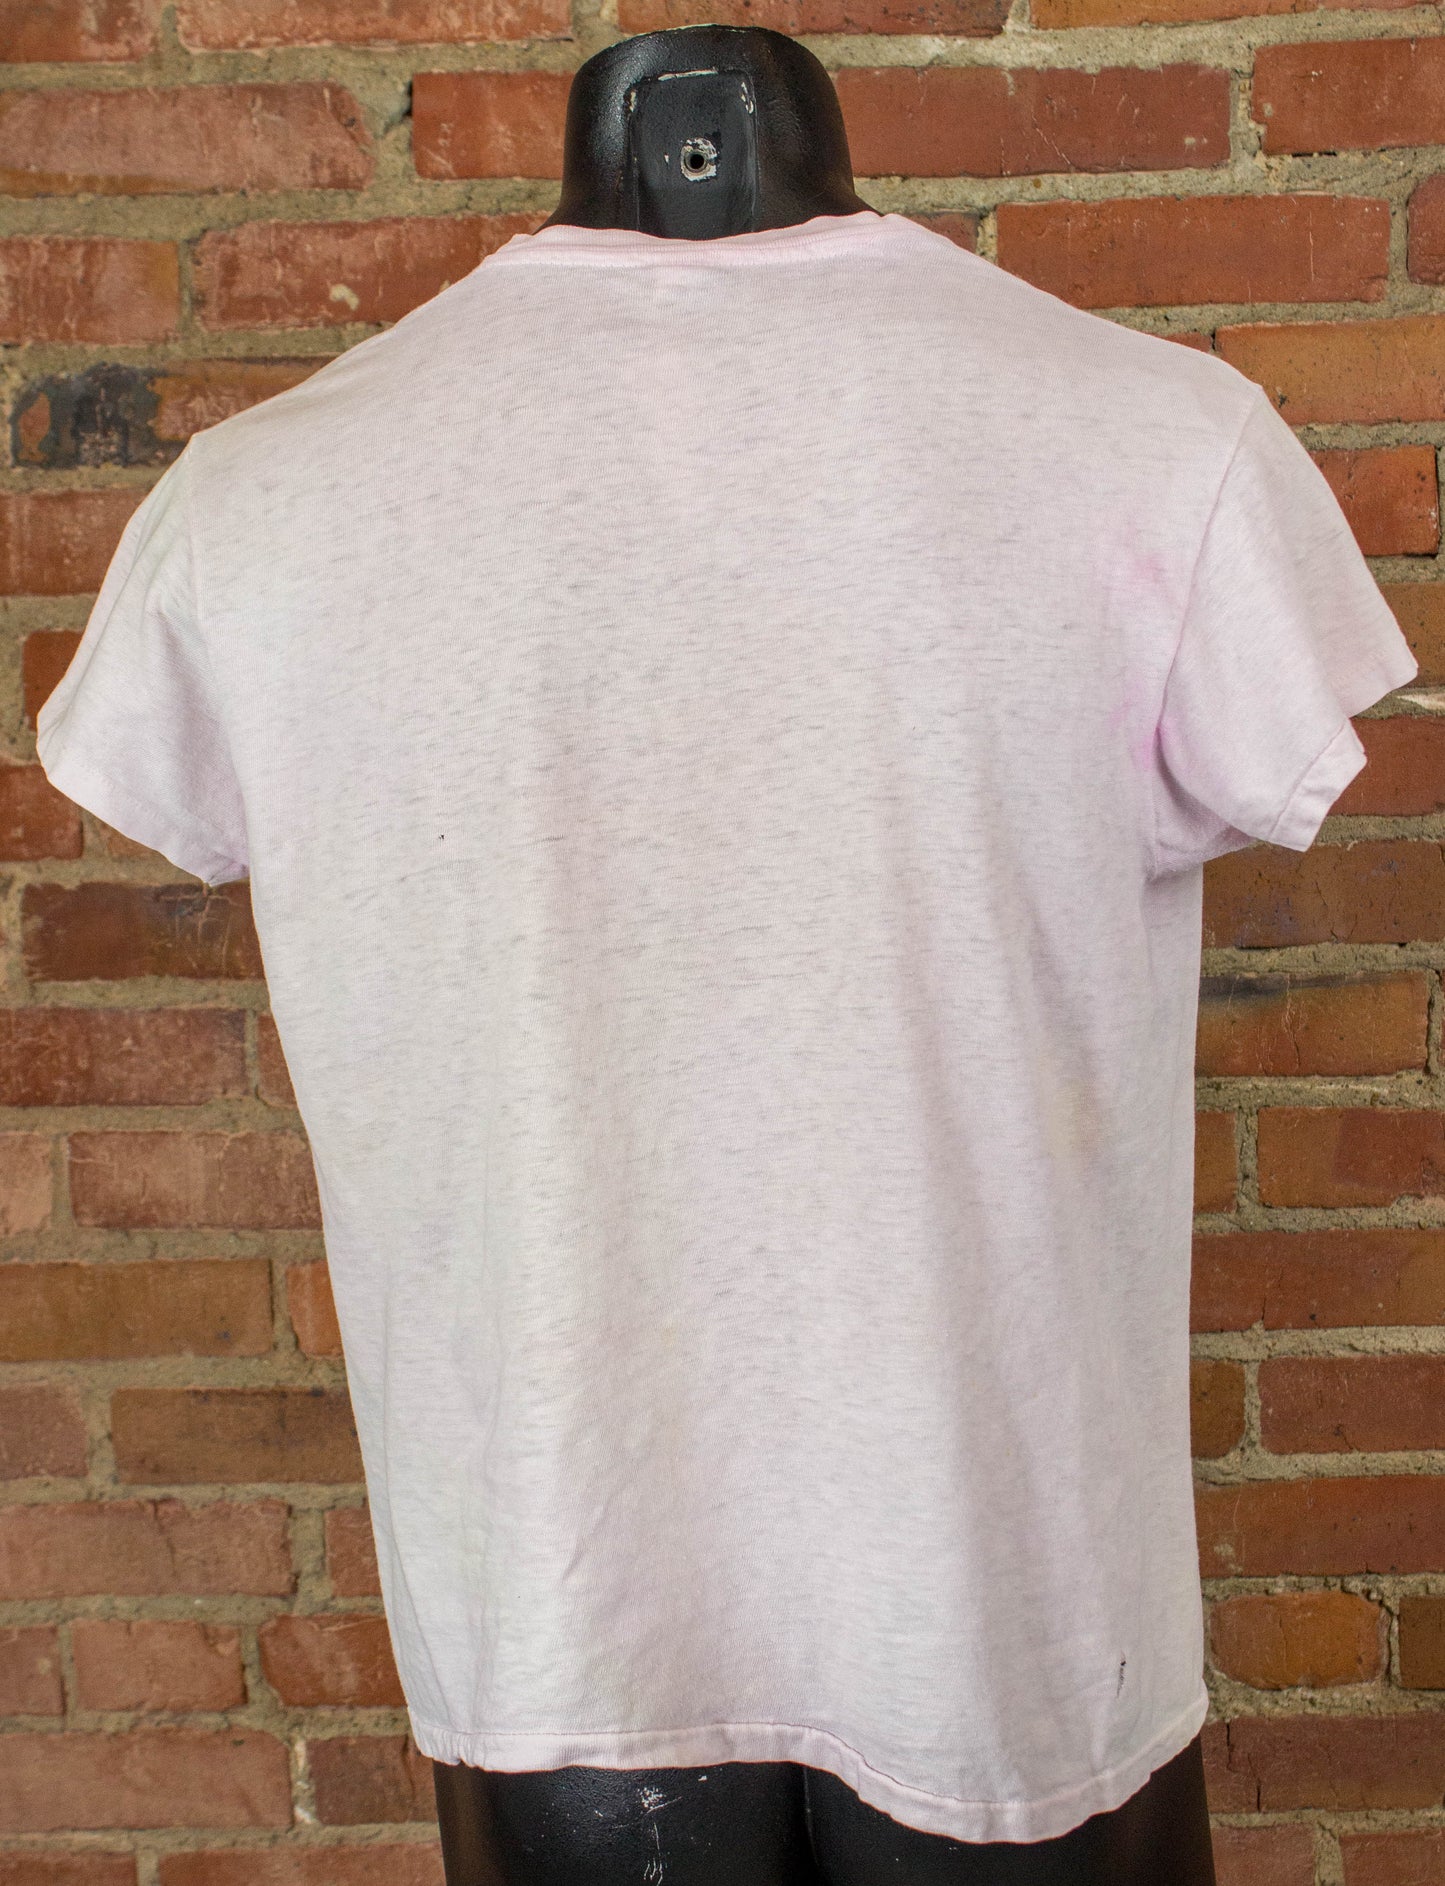 Vintage 1977 Hans Jayanti Rome Pink Guru Event Graphic T Shirt Unisex Medium